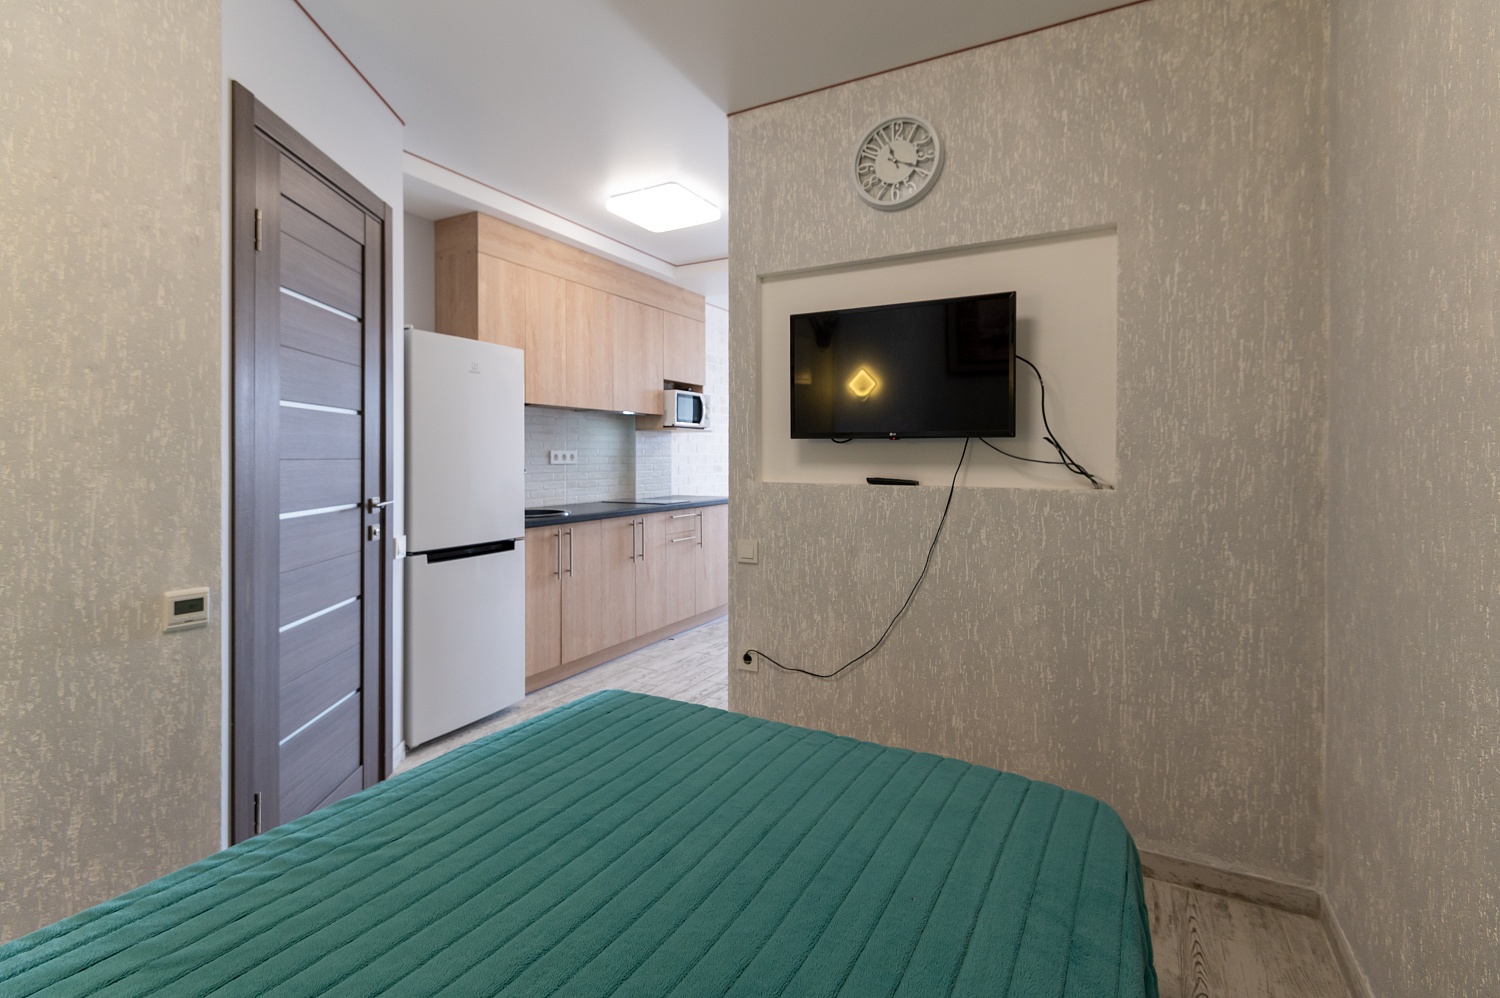 2-комнатные апартаменты в ЖК «Панорама Текиндже»